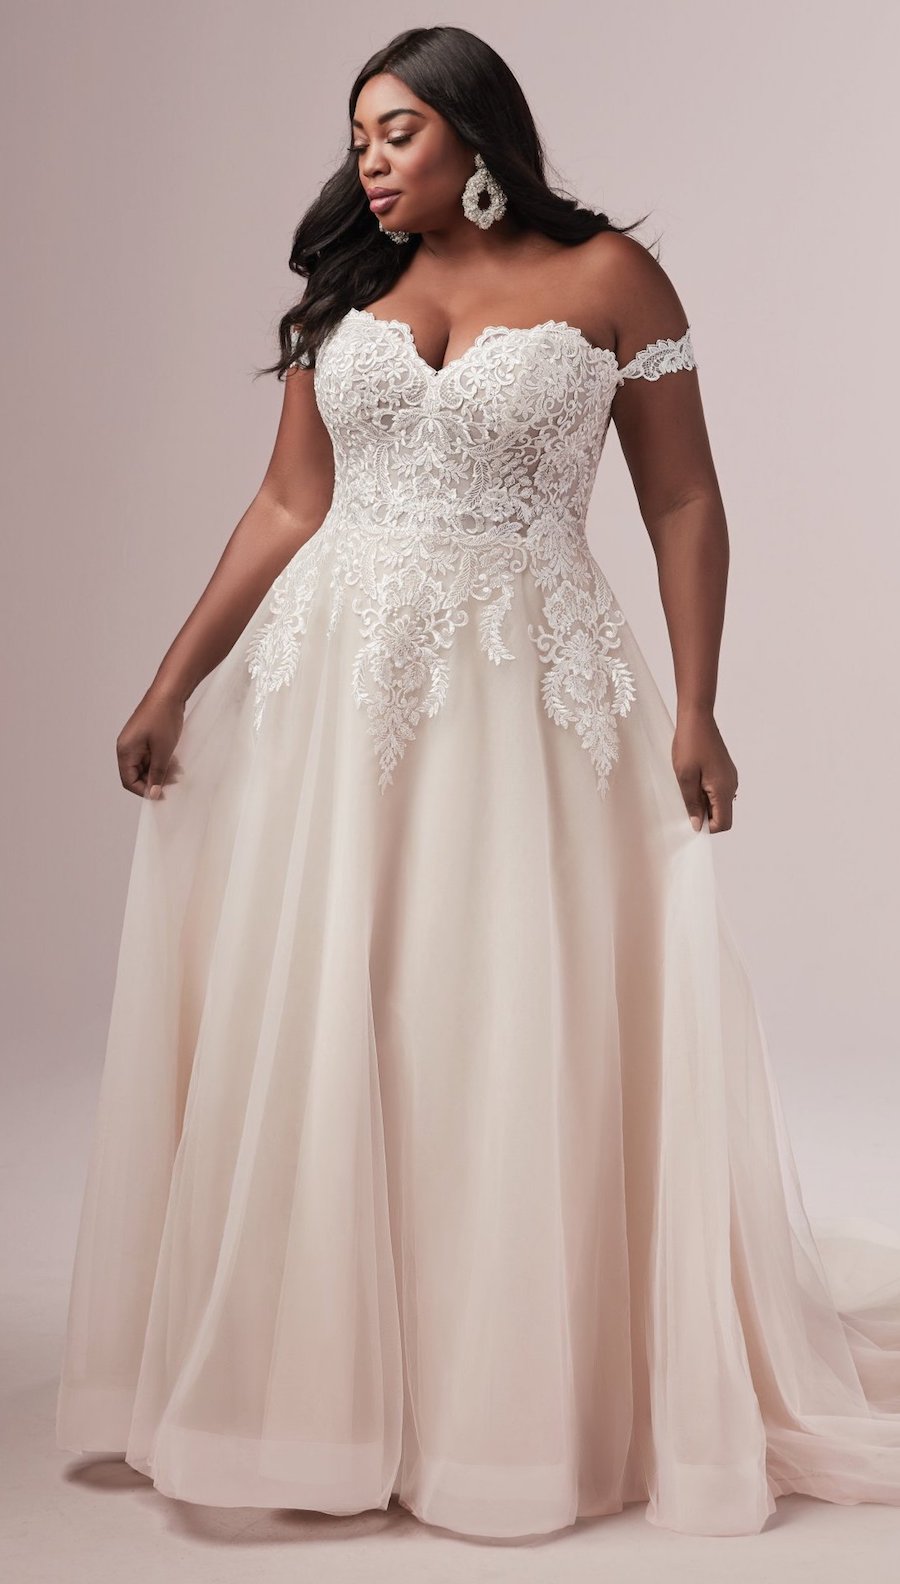 12 Gorgeous Plus Size Wedding Dresses For The Curvy Bride